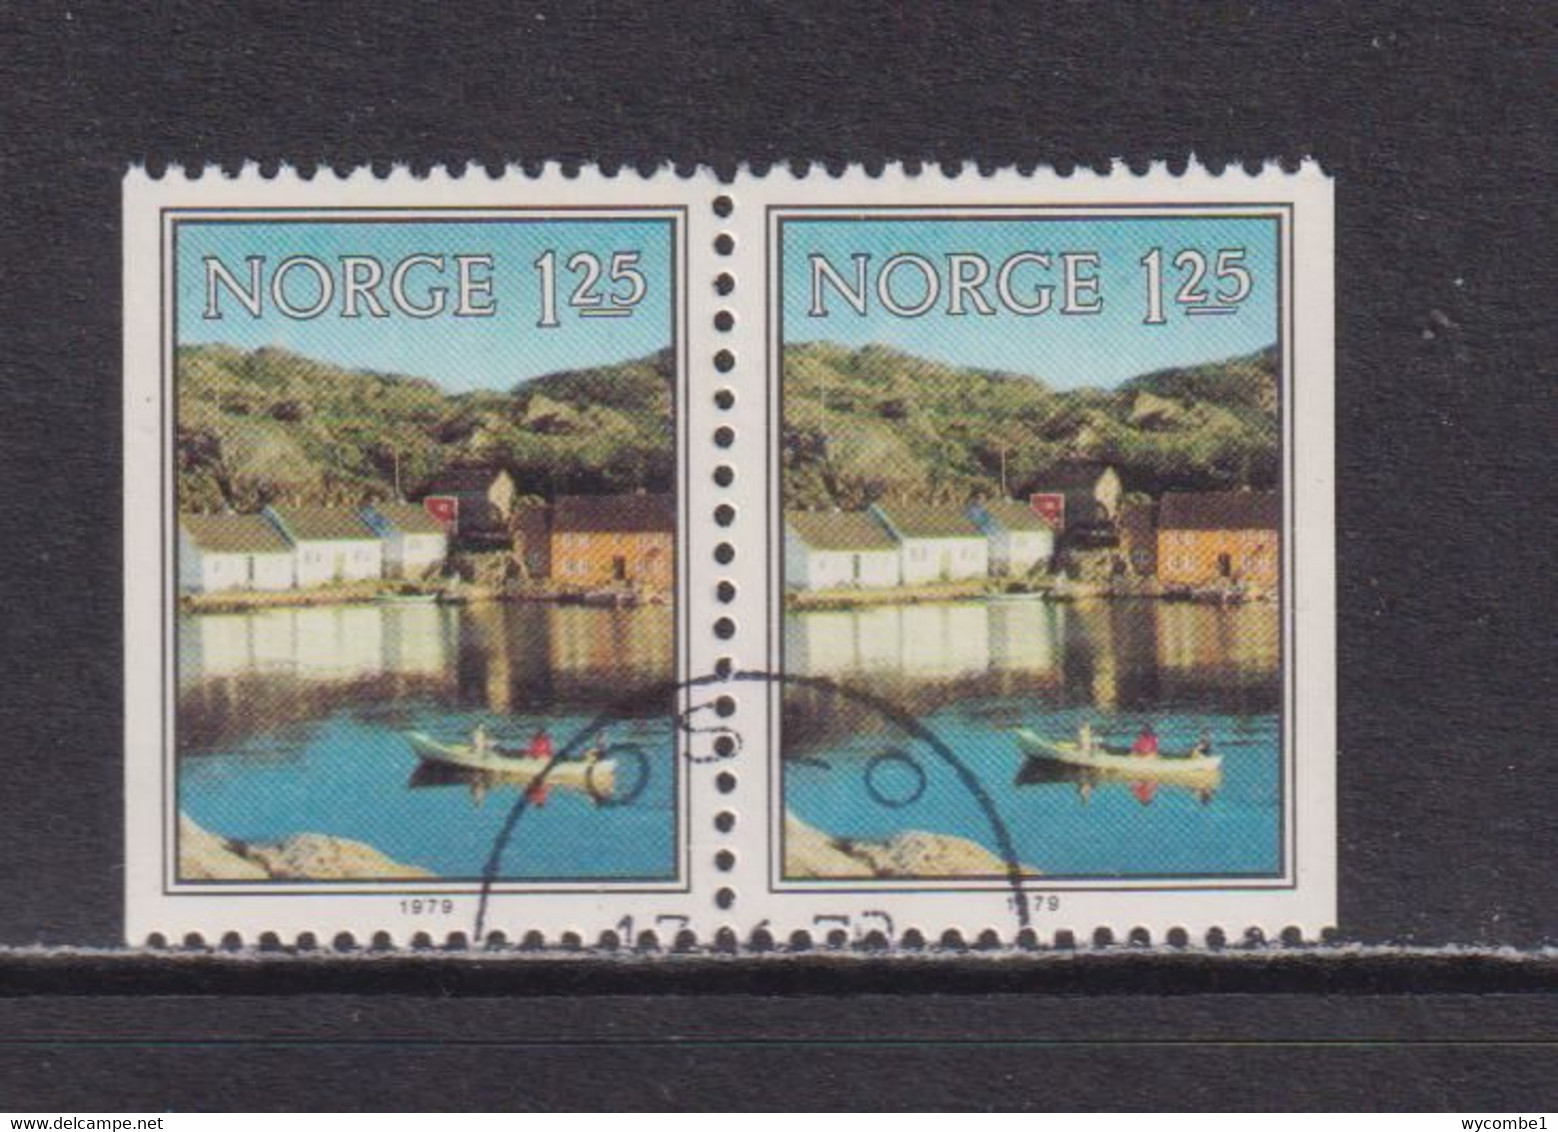 NORWAY - 1979 Scenery 1k25  Booklet Pair  Used As Scan - Used Stamps